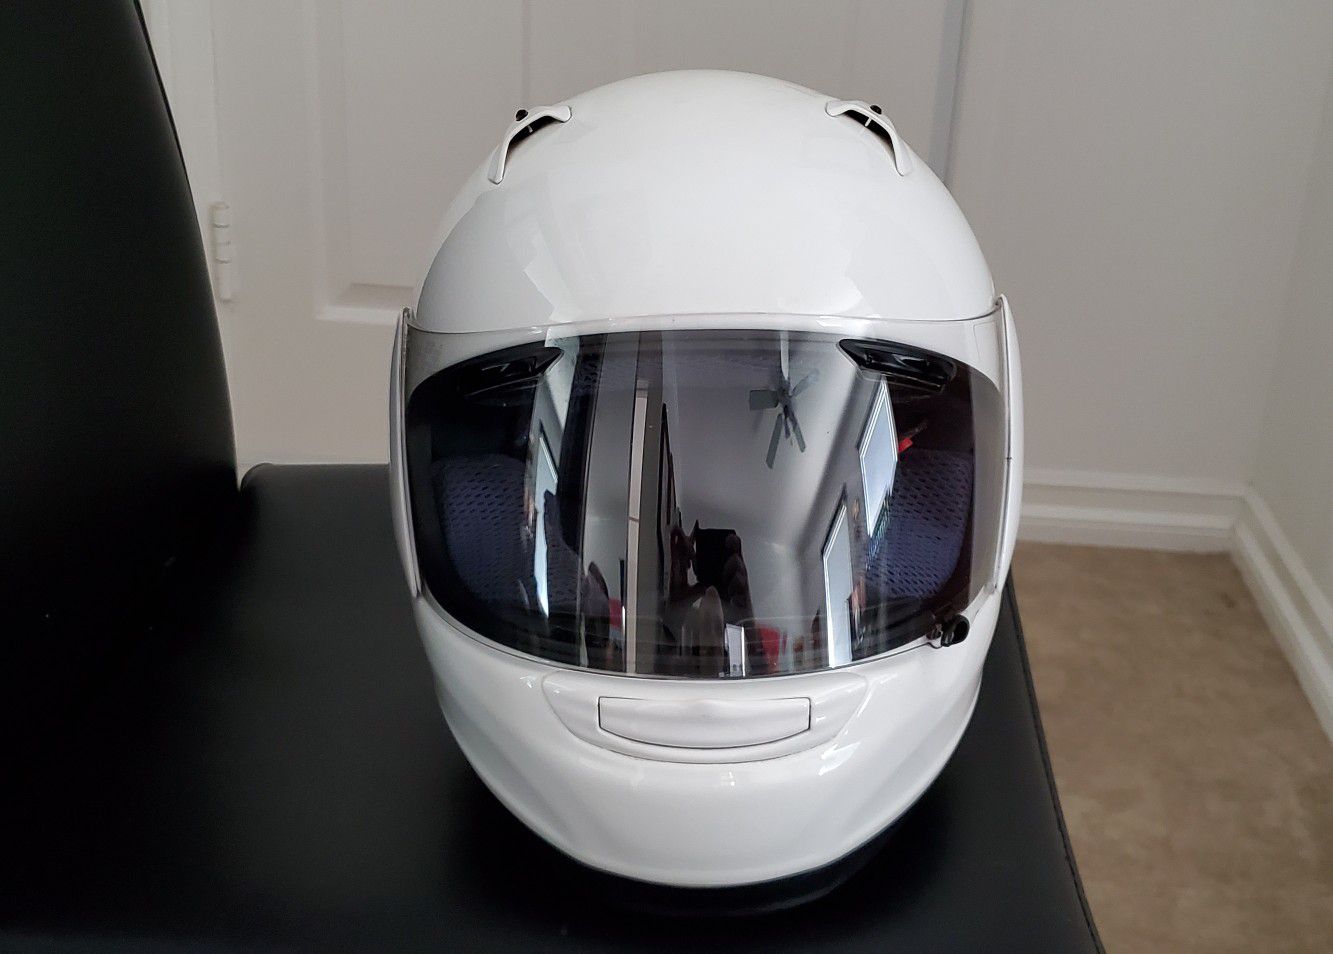 Arai Profile motorcycle helmet - size small - excellent condition